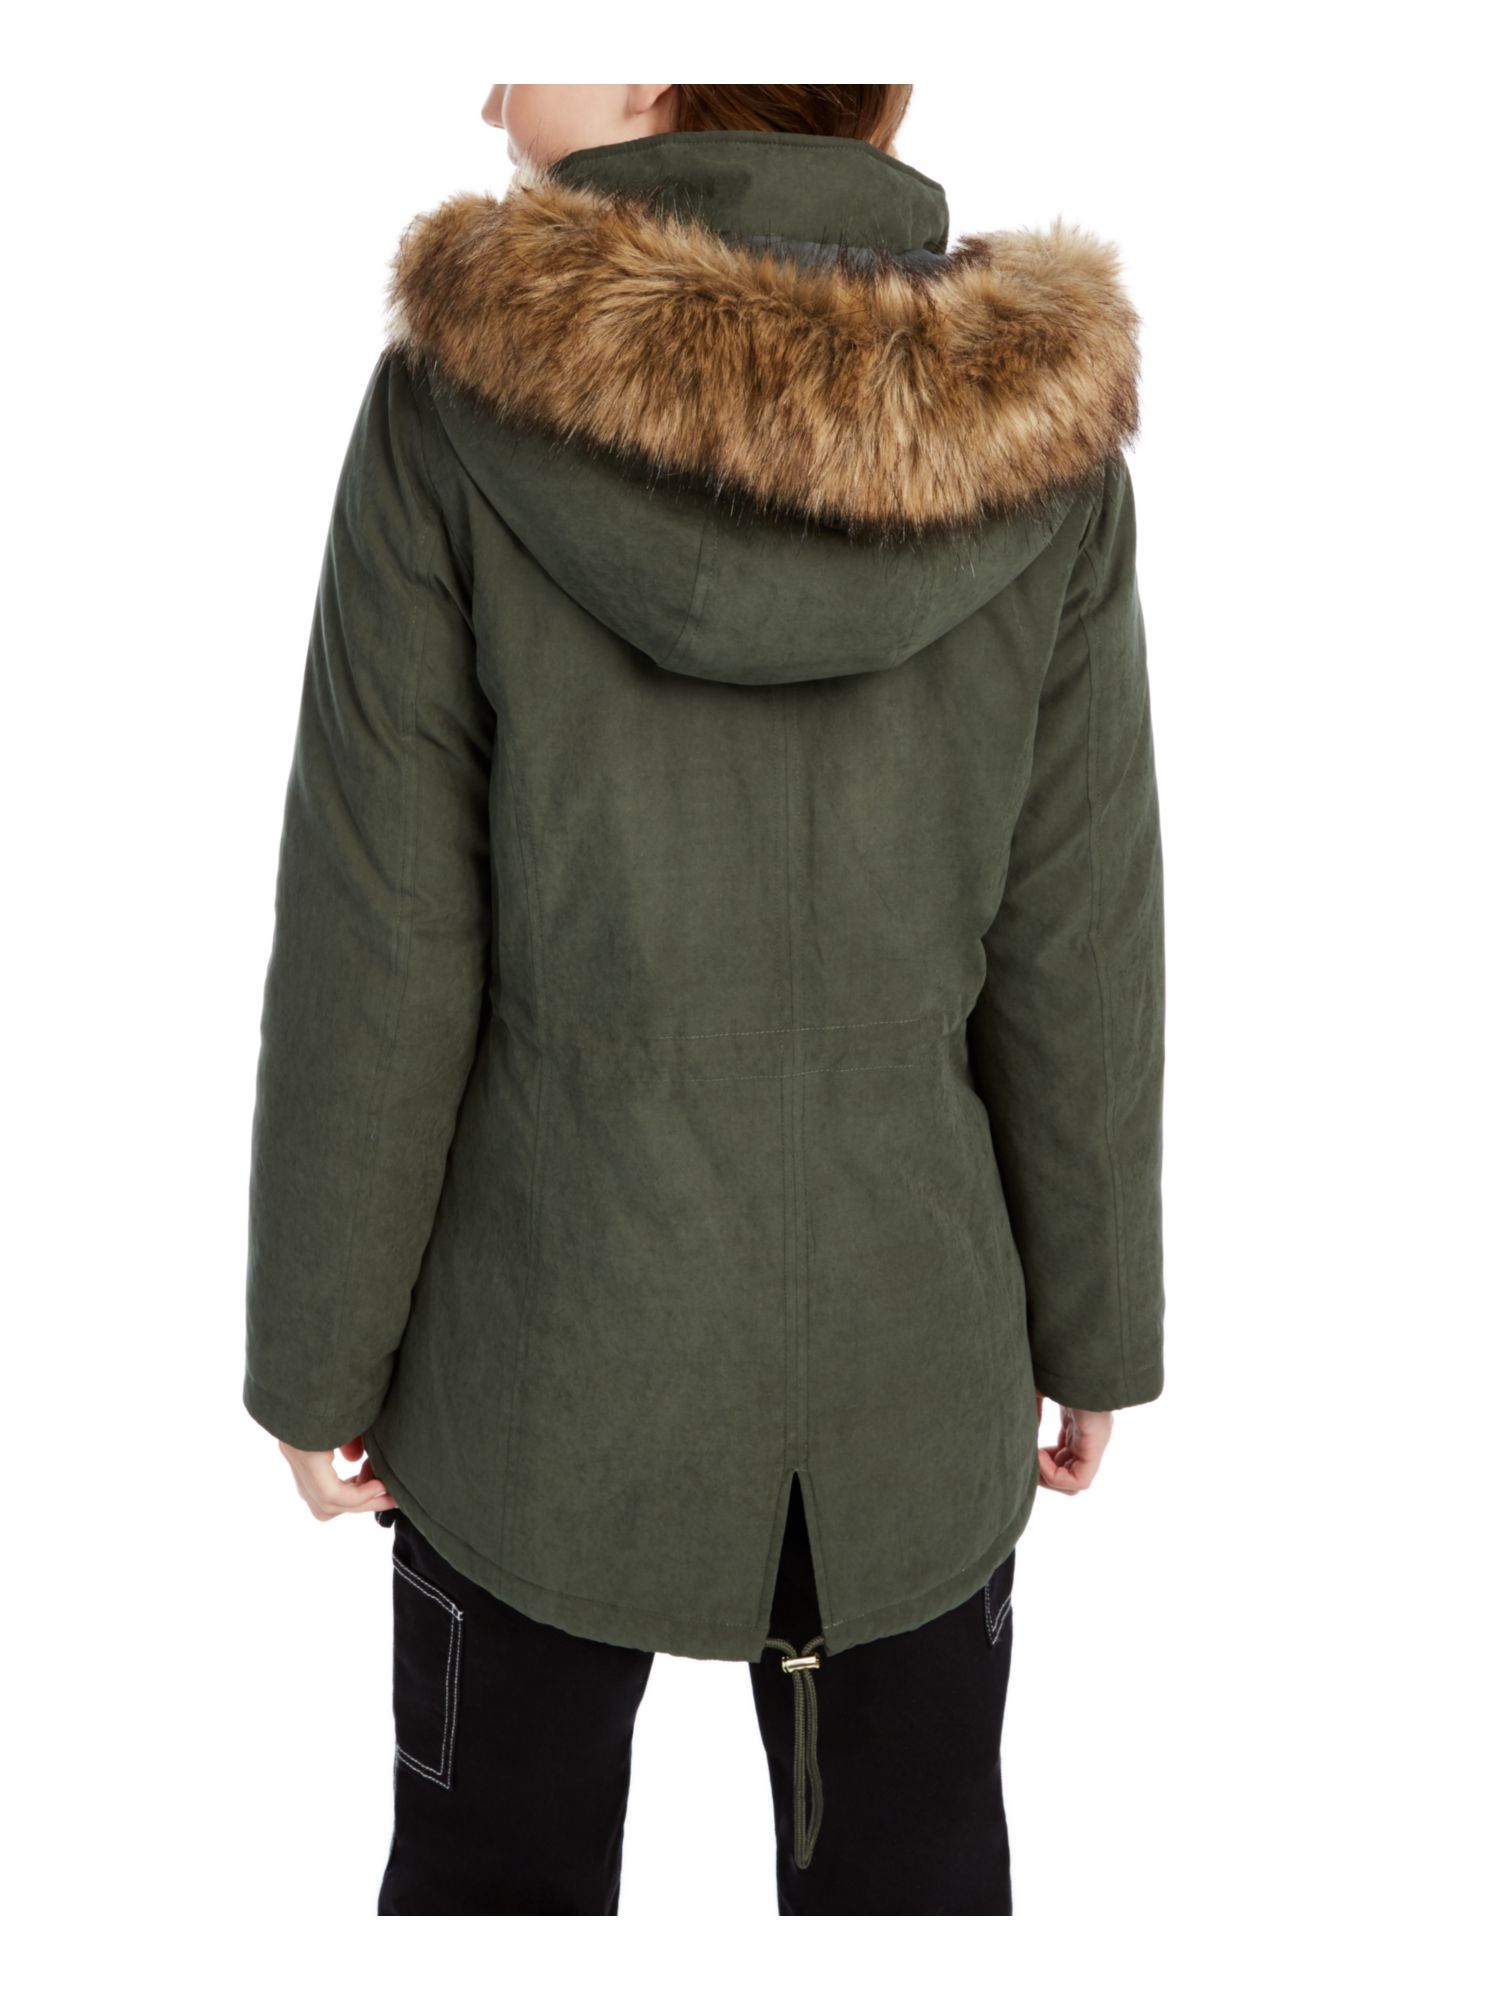 CELEBRITY PINK Womens Green Faux Fur Hood Parka Winter Jacket Coat Juniors L - image 2 of 2